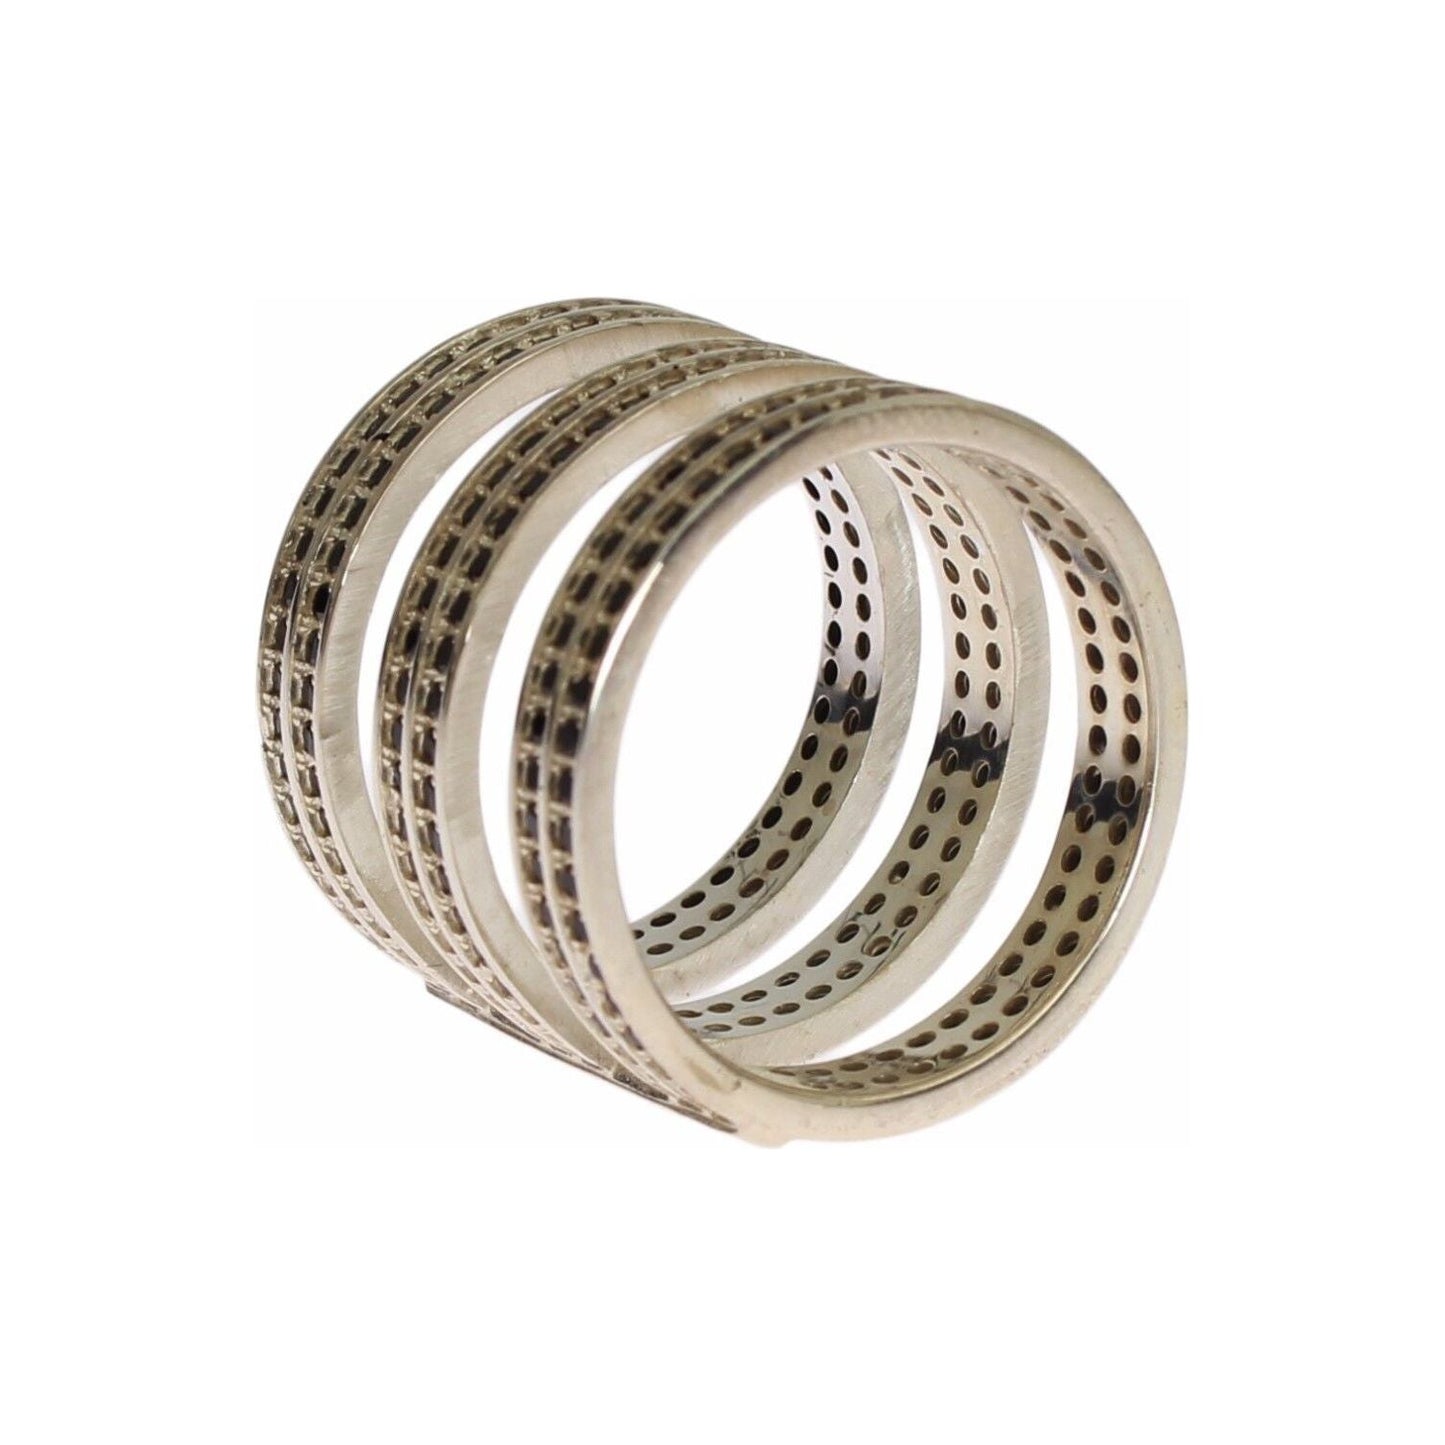 Nialaya Exquisite Black CZ Crystal Silver Ring Ring black-cz-925-sterling-silver-womens-ring-1